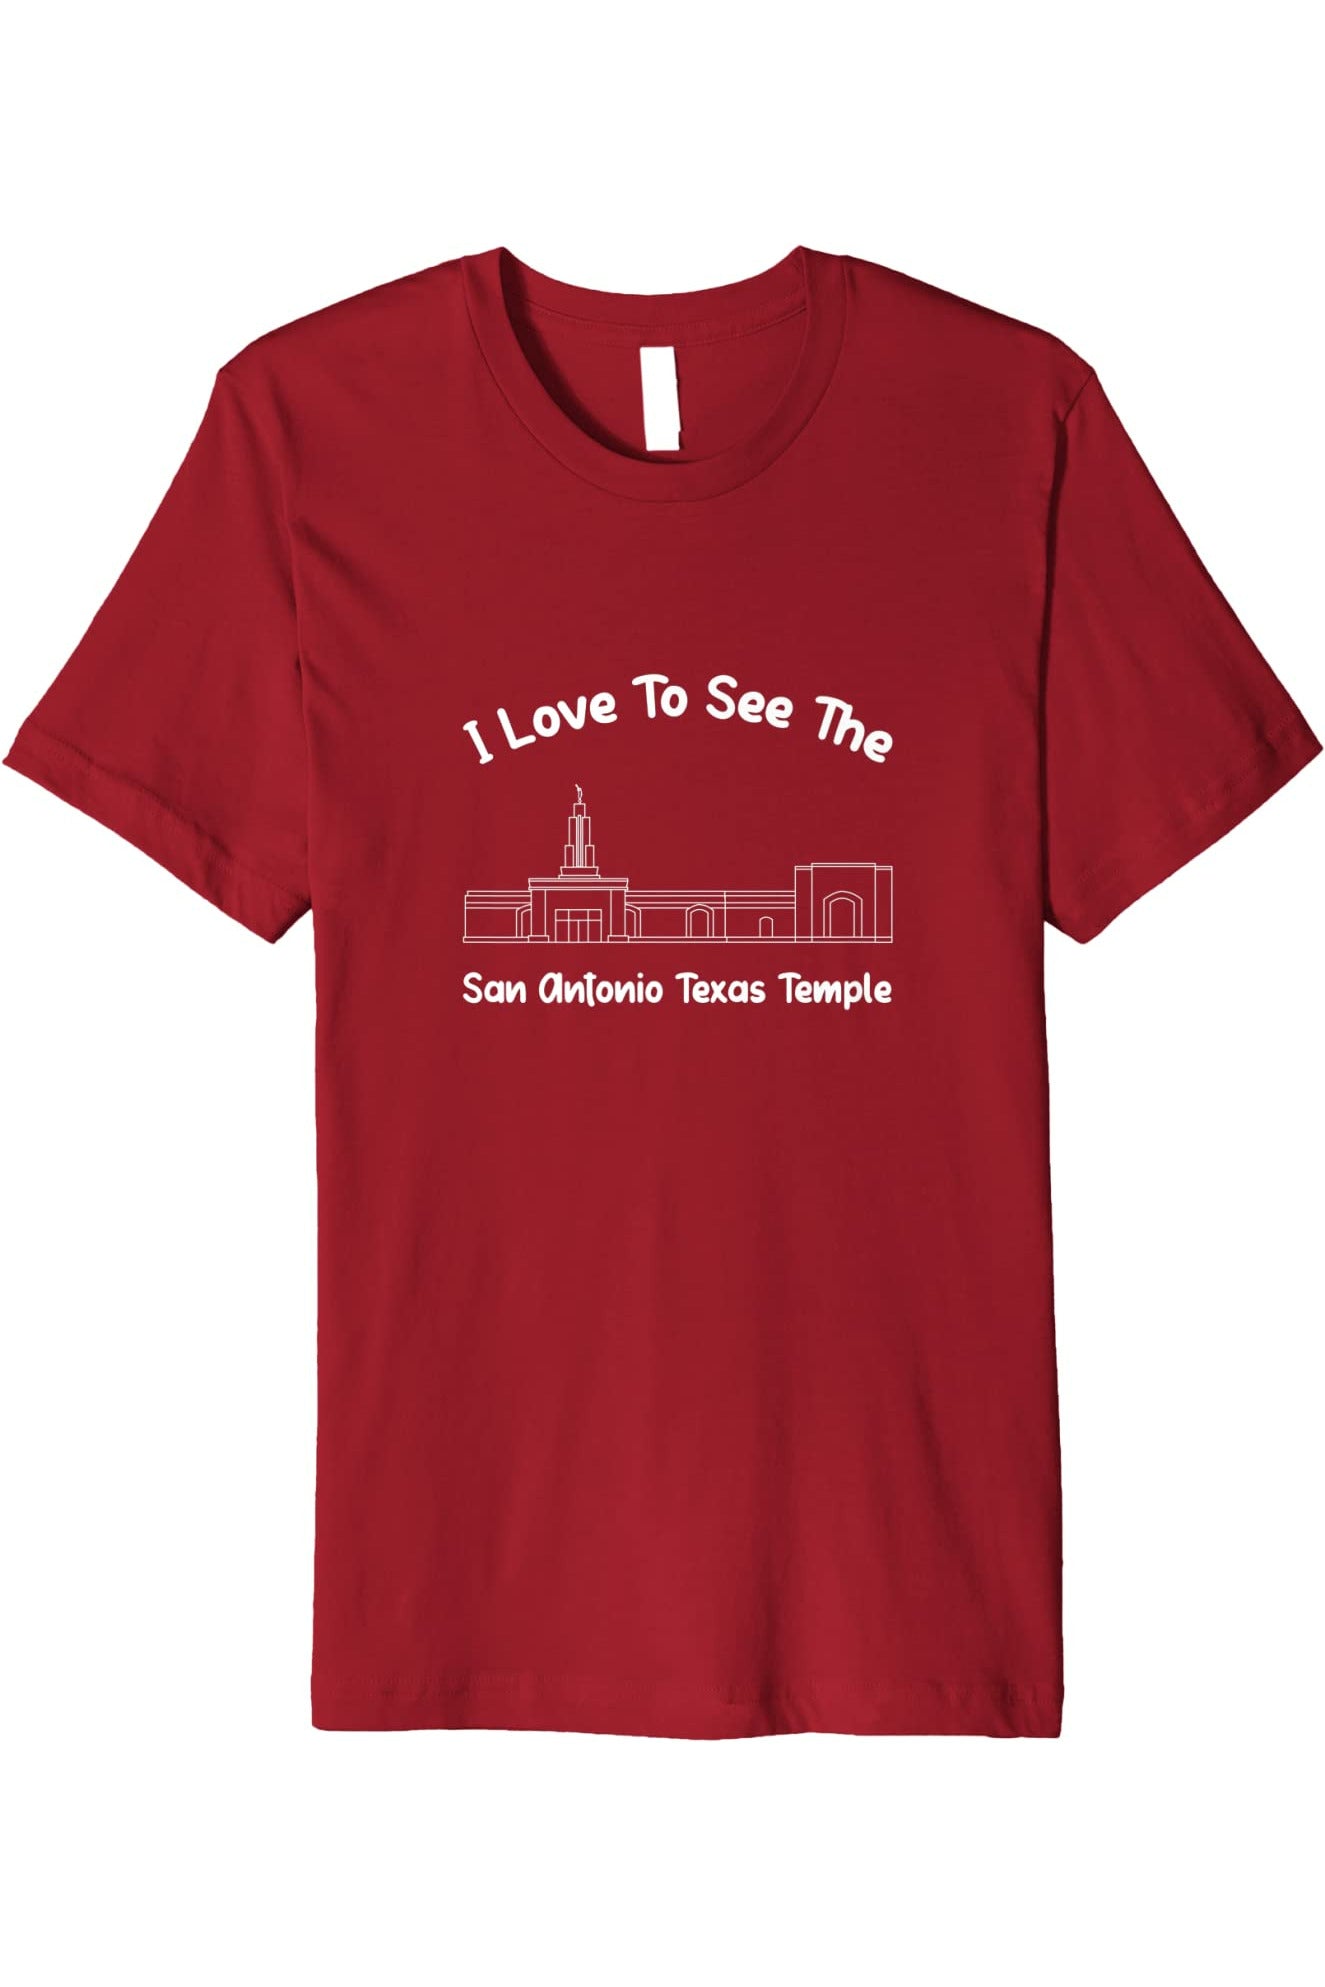 San Antonio Texas Temple T-Shirt - Premium - Primary Style (English) US